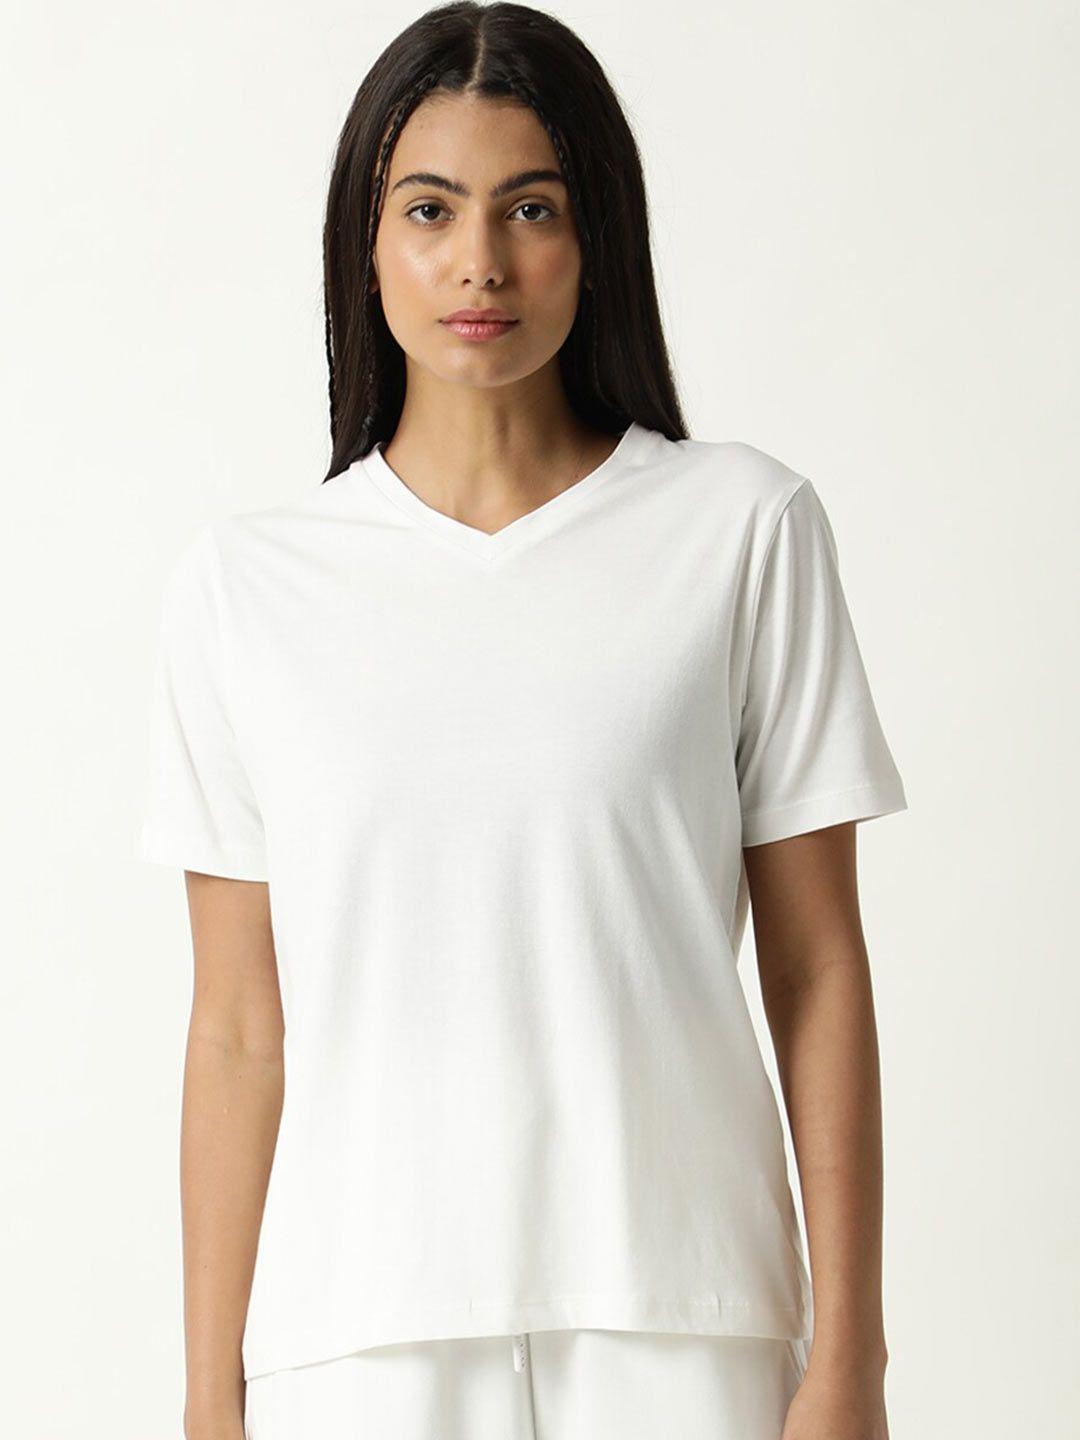 articale women off white solid v-neck slim fit cotton t-shirt